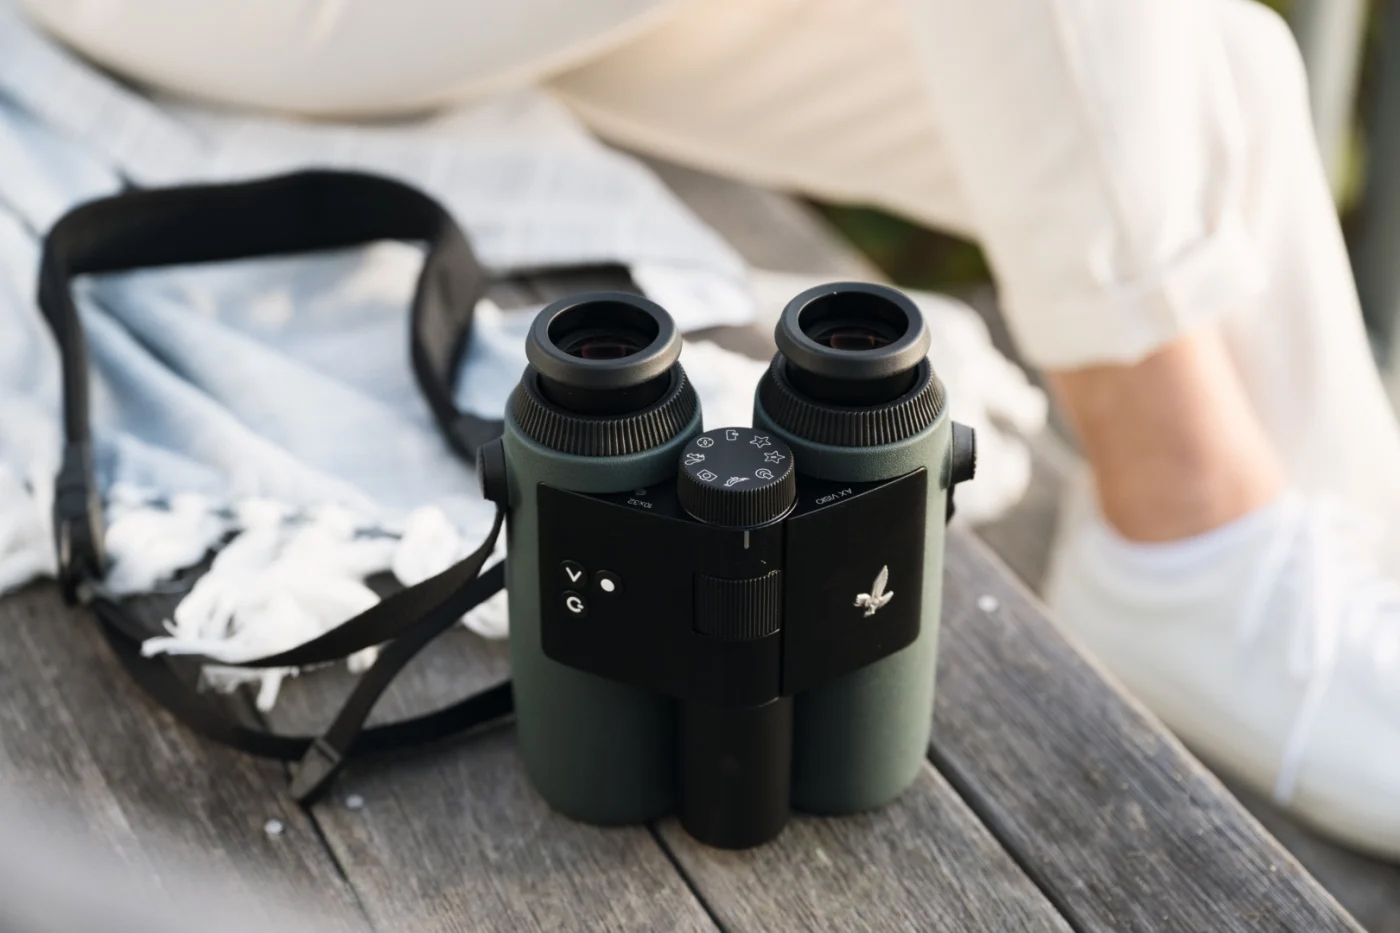 A pair of Swarovski binoculars on a table